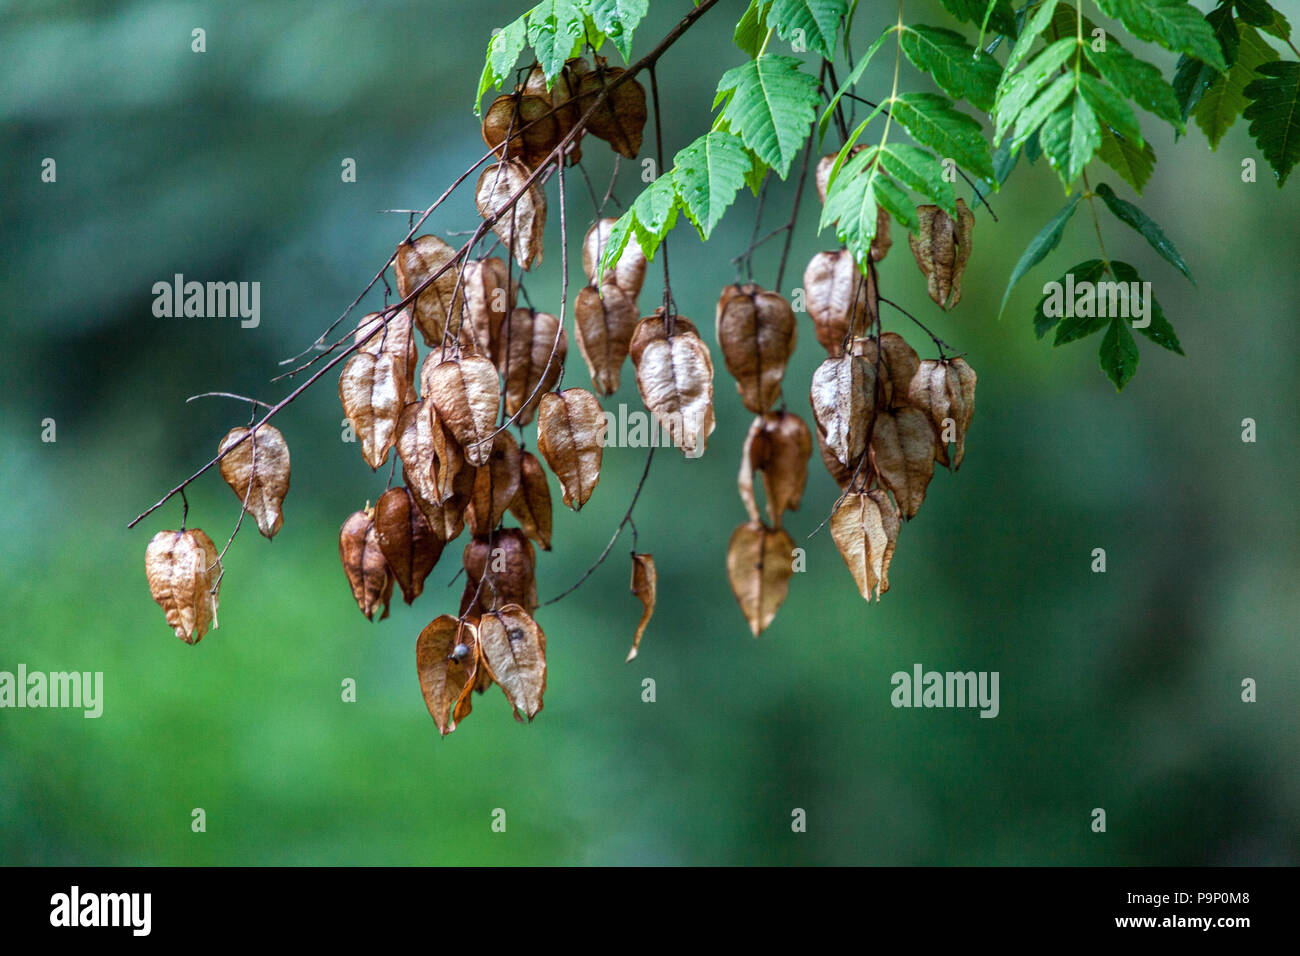 Koelreuteria paniculata 'Apiculata', goldenrain tree, Fruits Gone to seed pods hanging Stock Photo